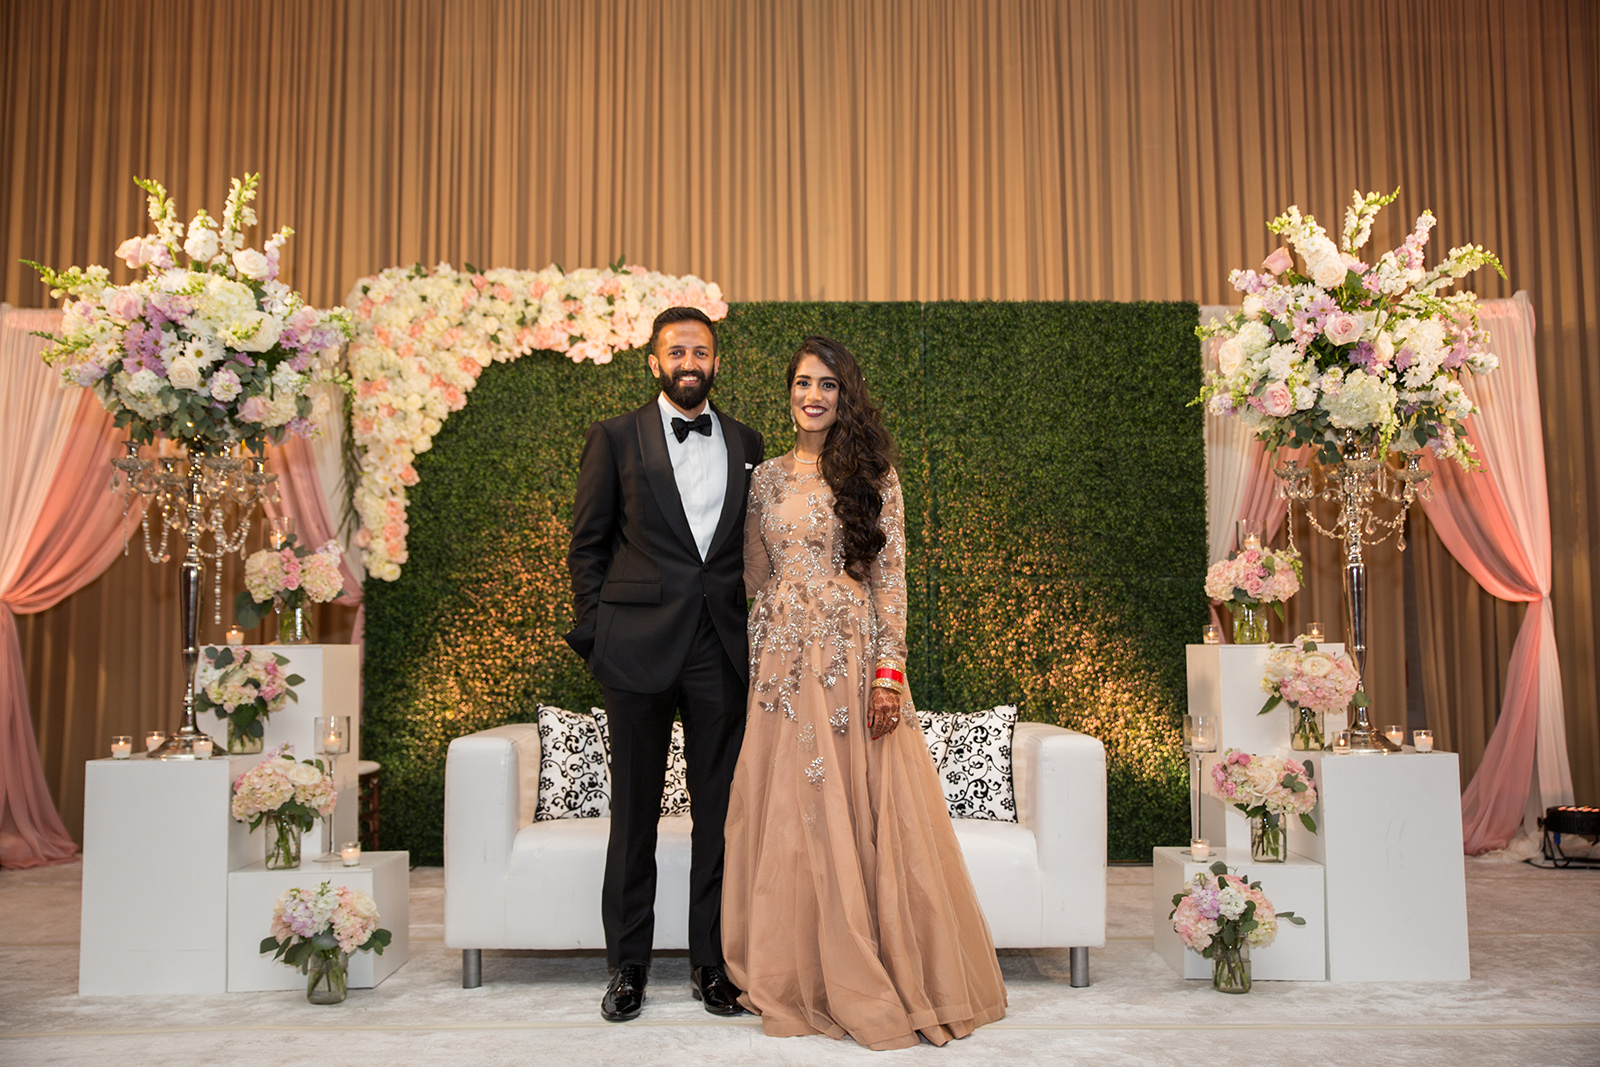 Le Cape Weddings - Sumeet and Chavi - Reception Family Formals   -1.jpg